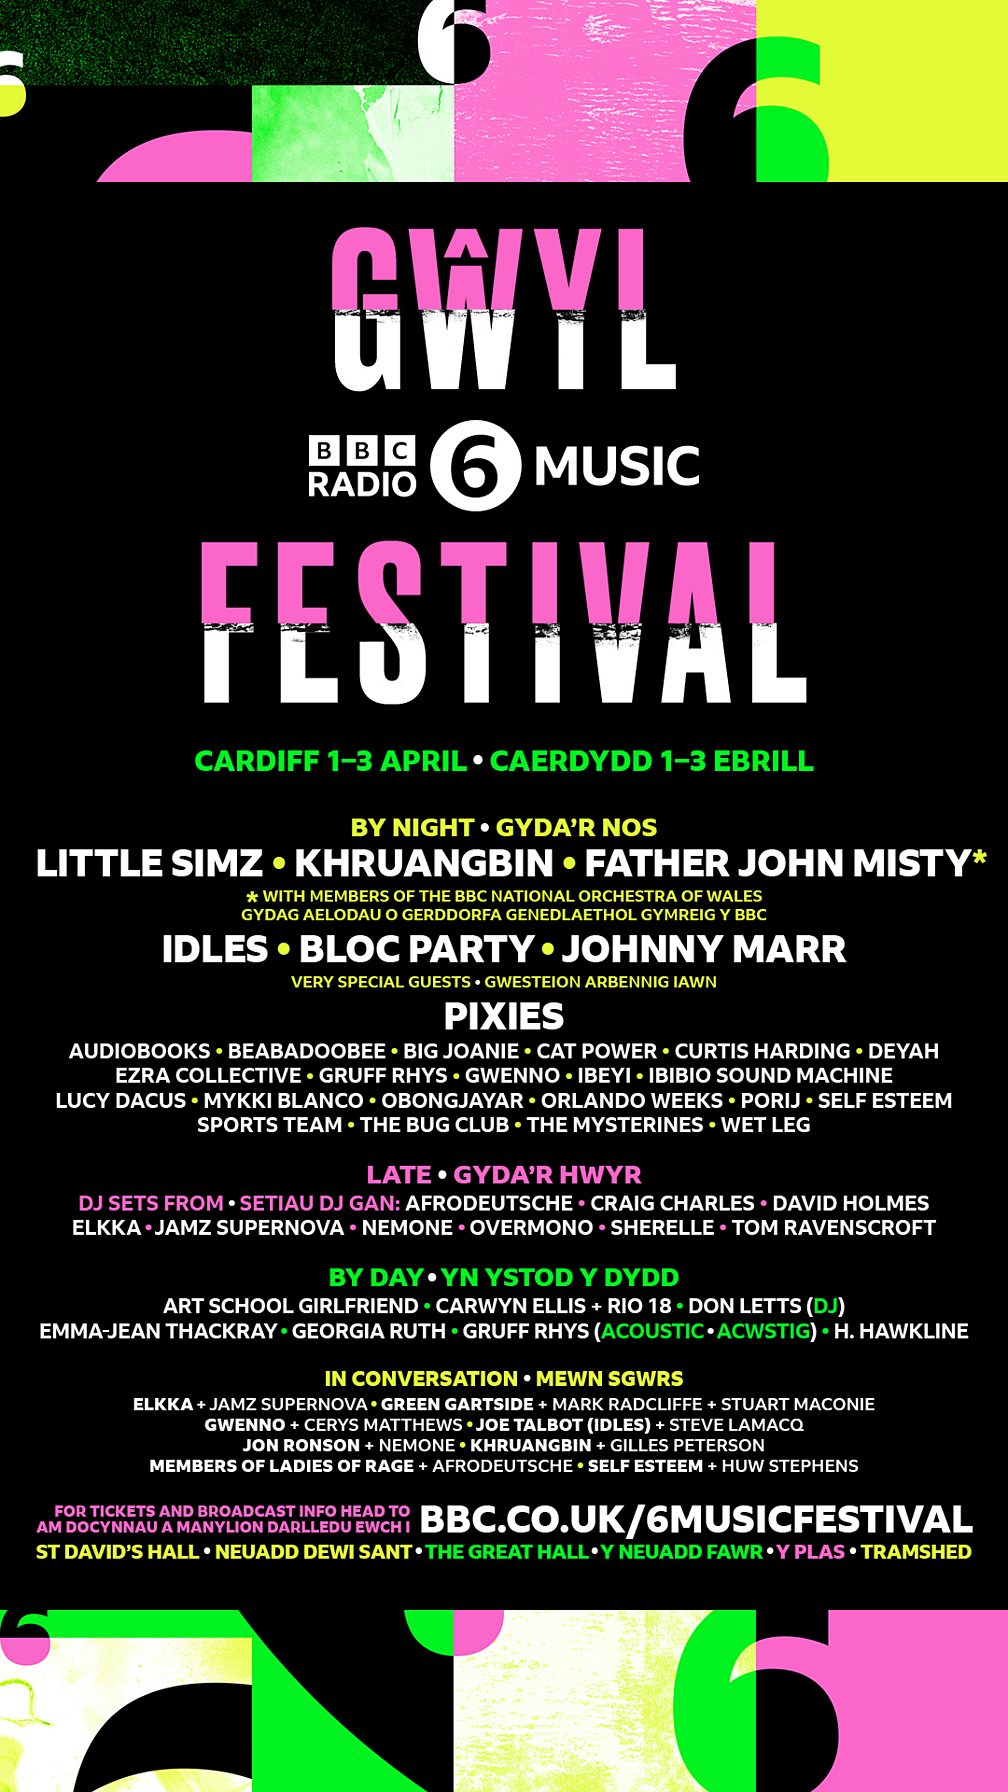 4/3/22 - Cardiff, Wales, St. David's Hall, "BBC Radio 6 Music Festival" 3175